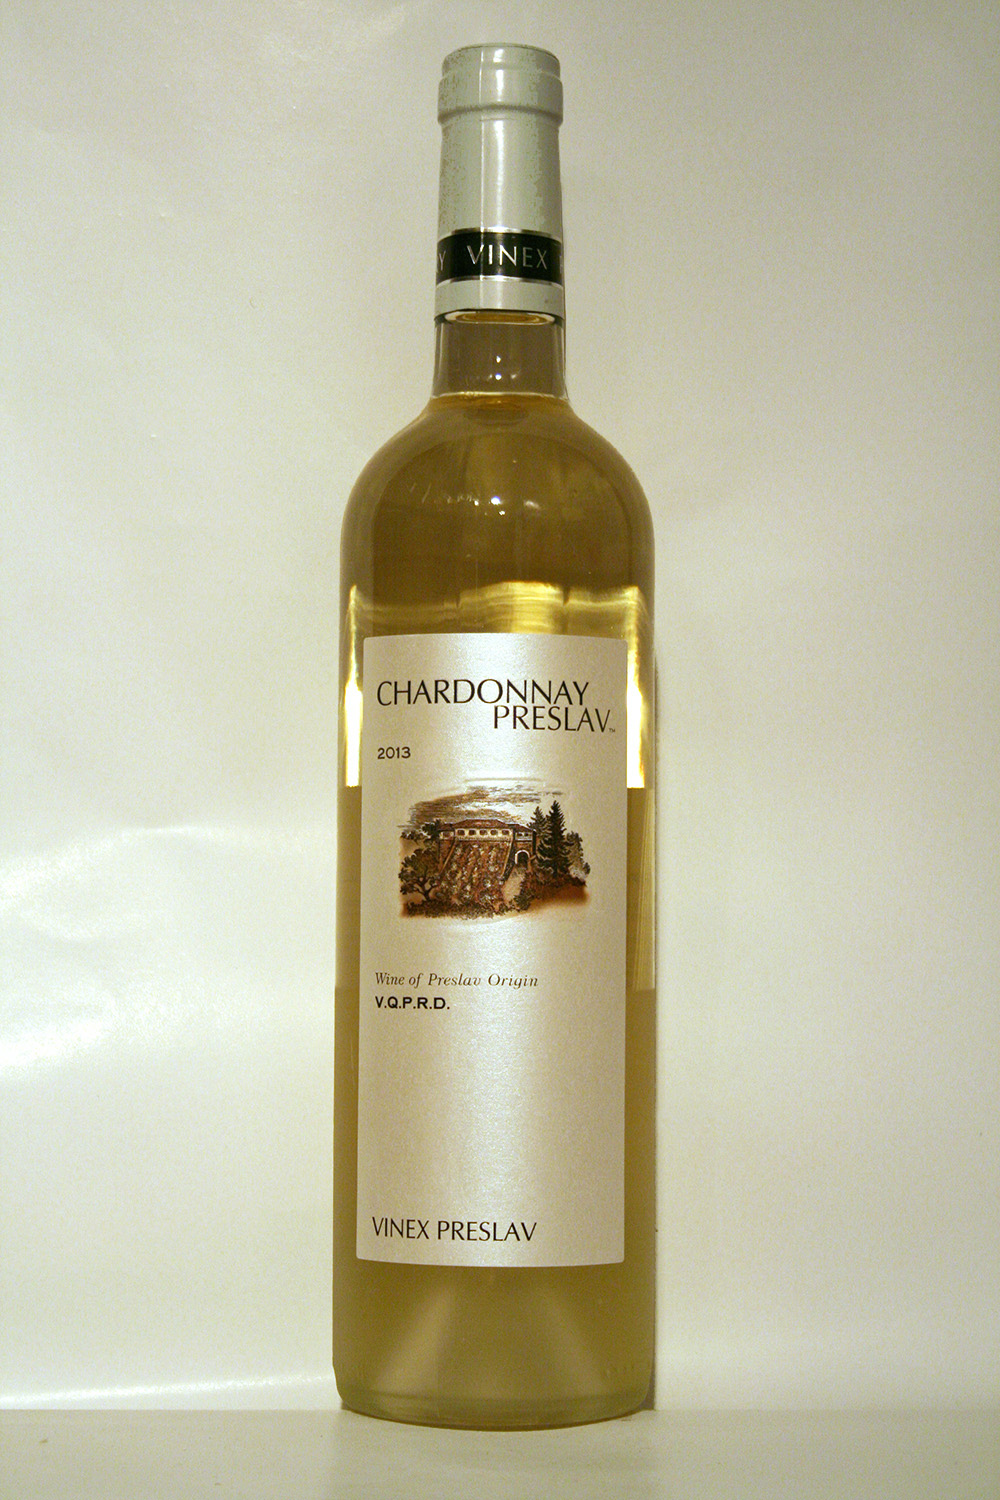 Chardonnay Preslav 2013